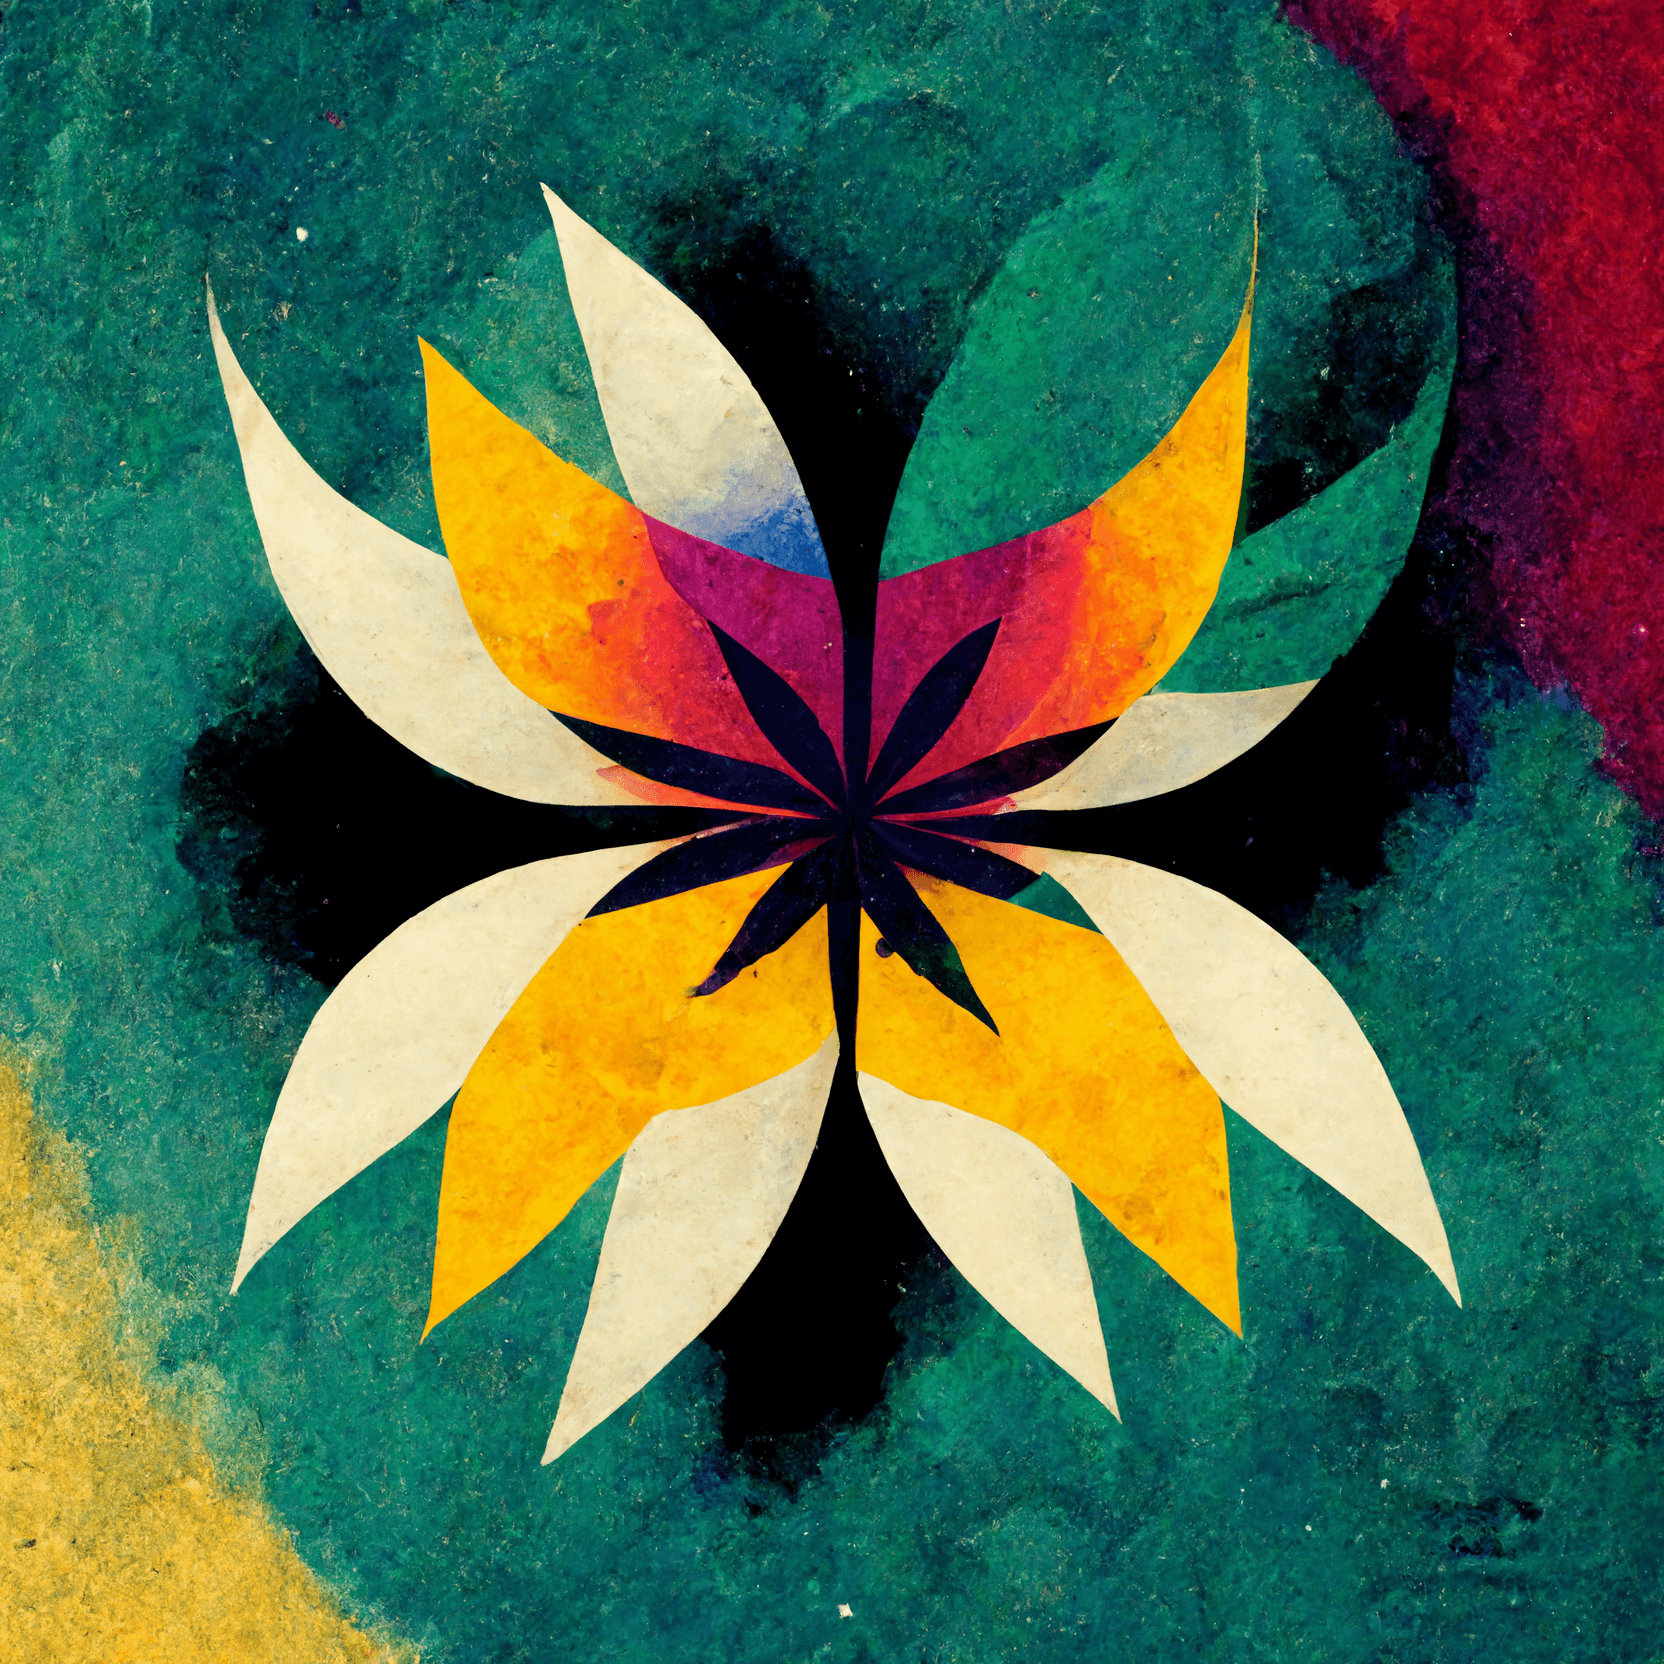 Cannabis Botanical Illustration in the style of Wassily Kandinsky - Goldleaf